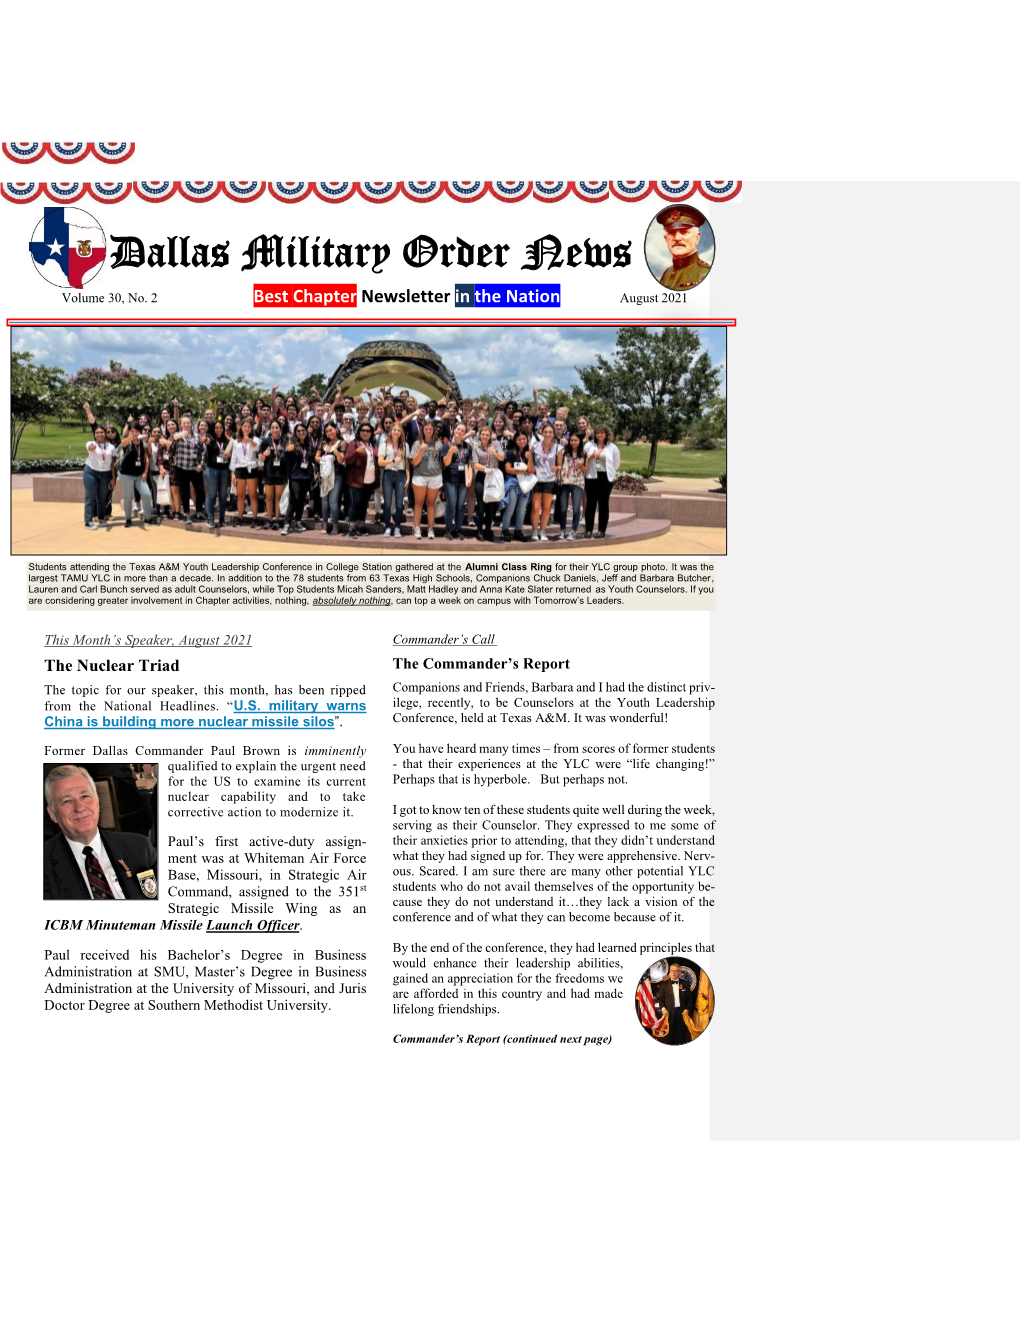 Dallas Military Order News